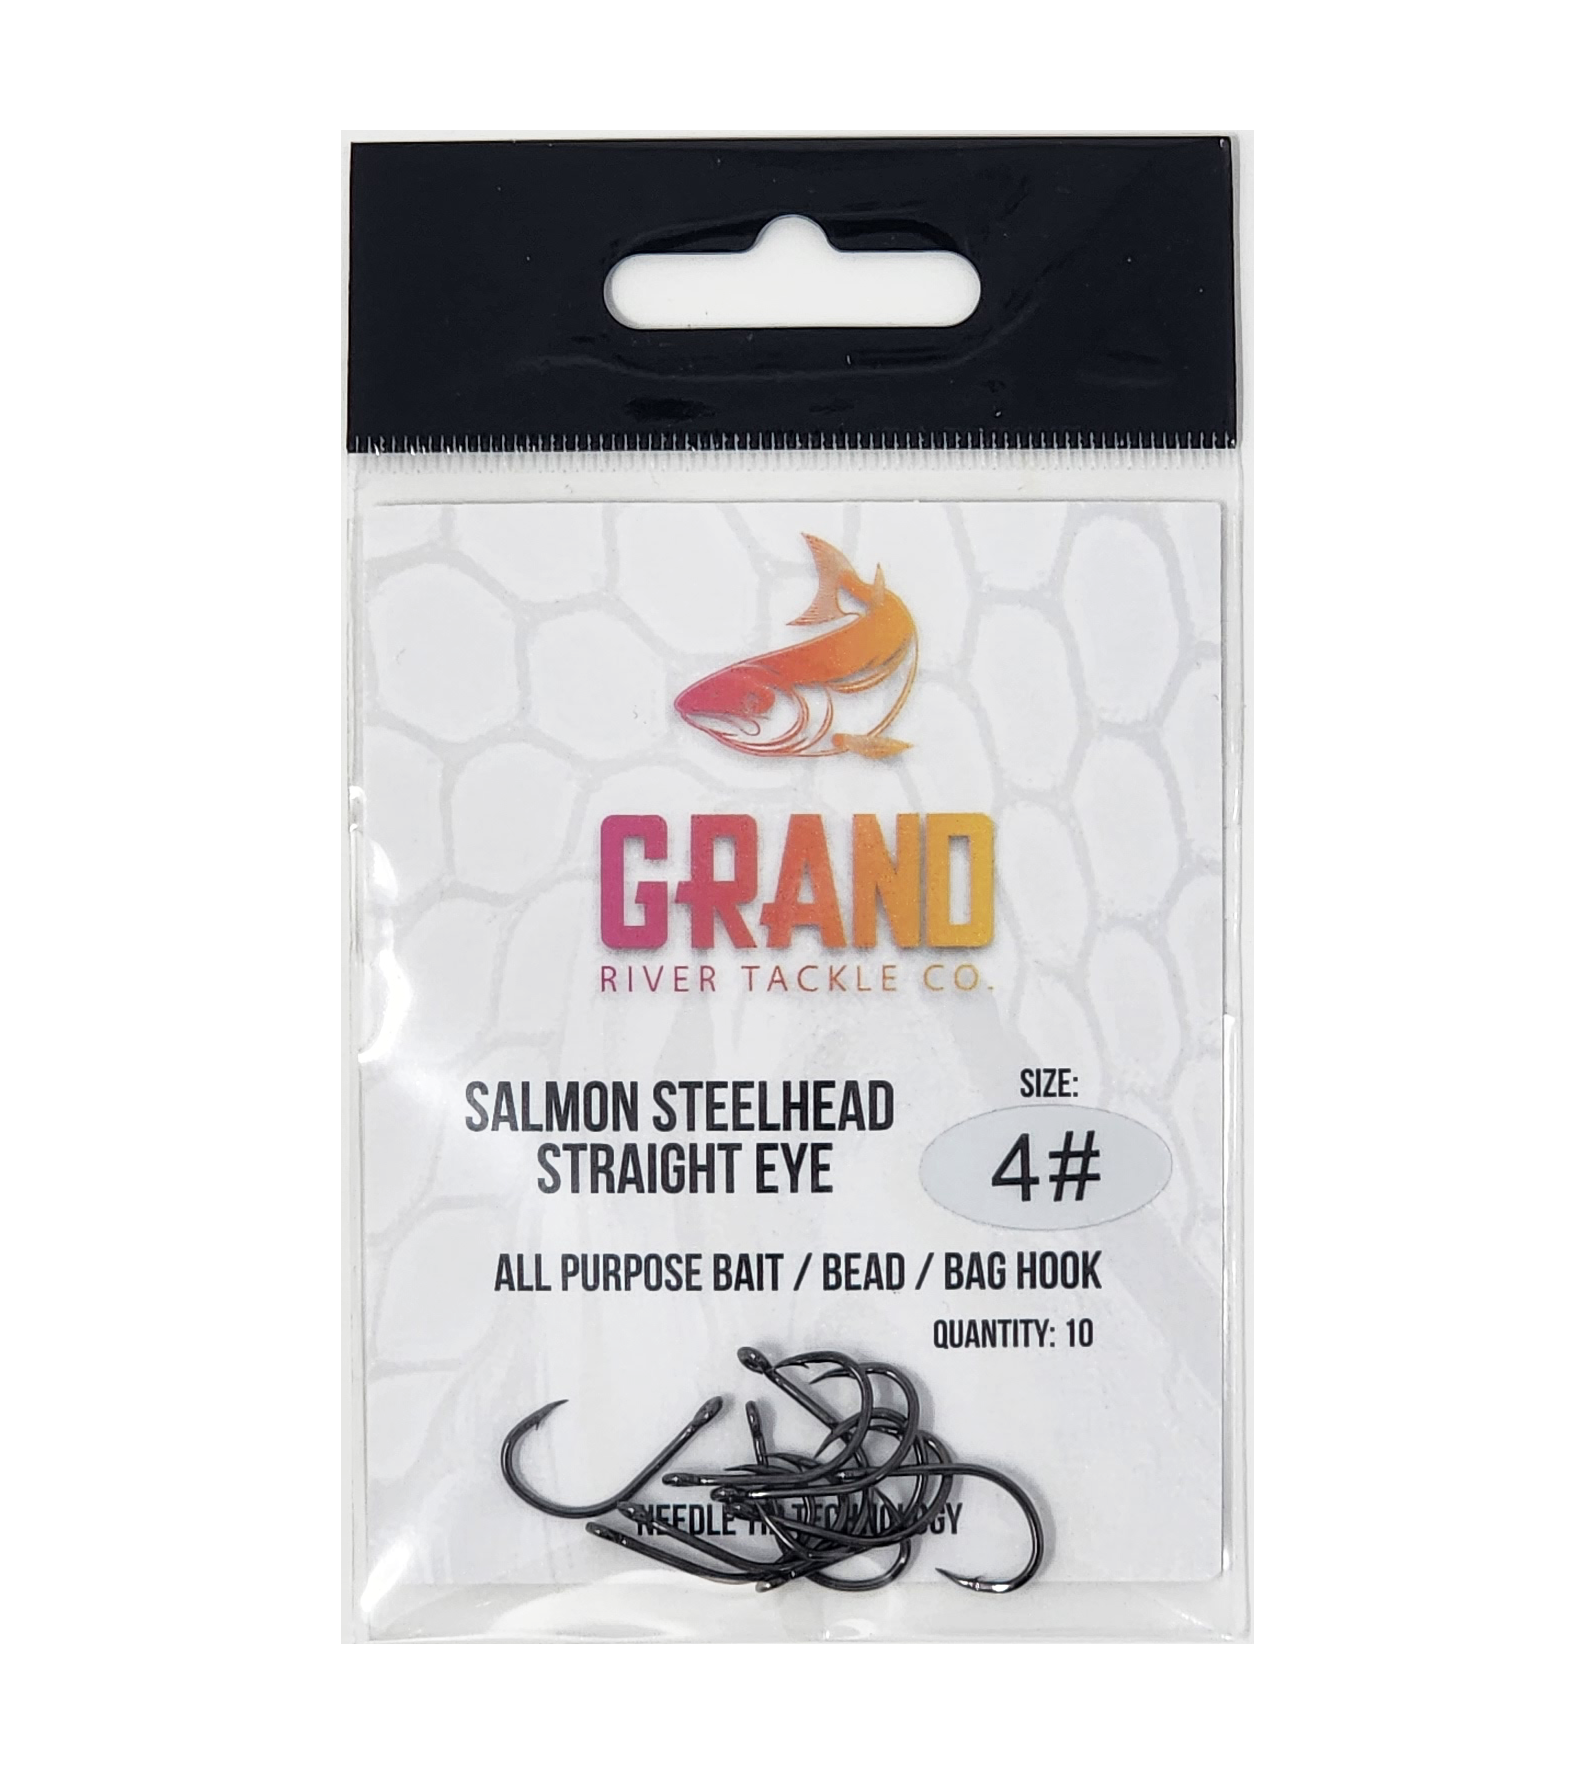 Salmon Steelhead All Purpose Bait / Bead / Bag Hook Straight Eye – Grand  River Tackle